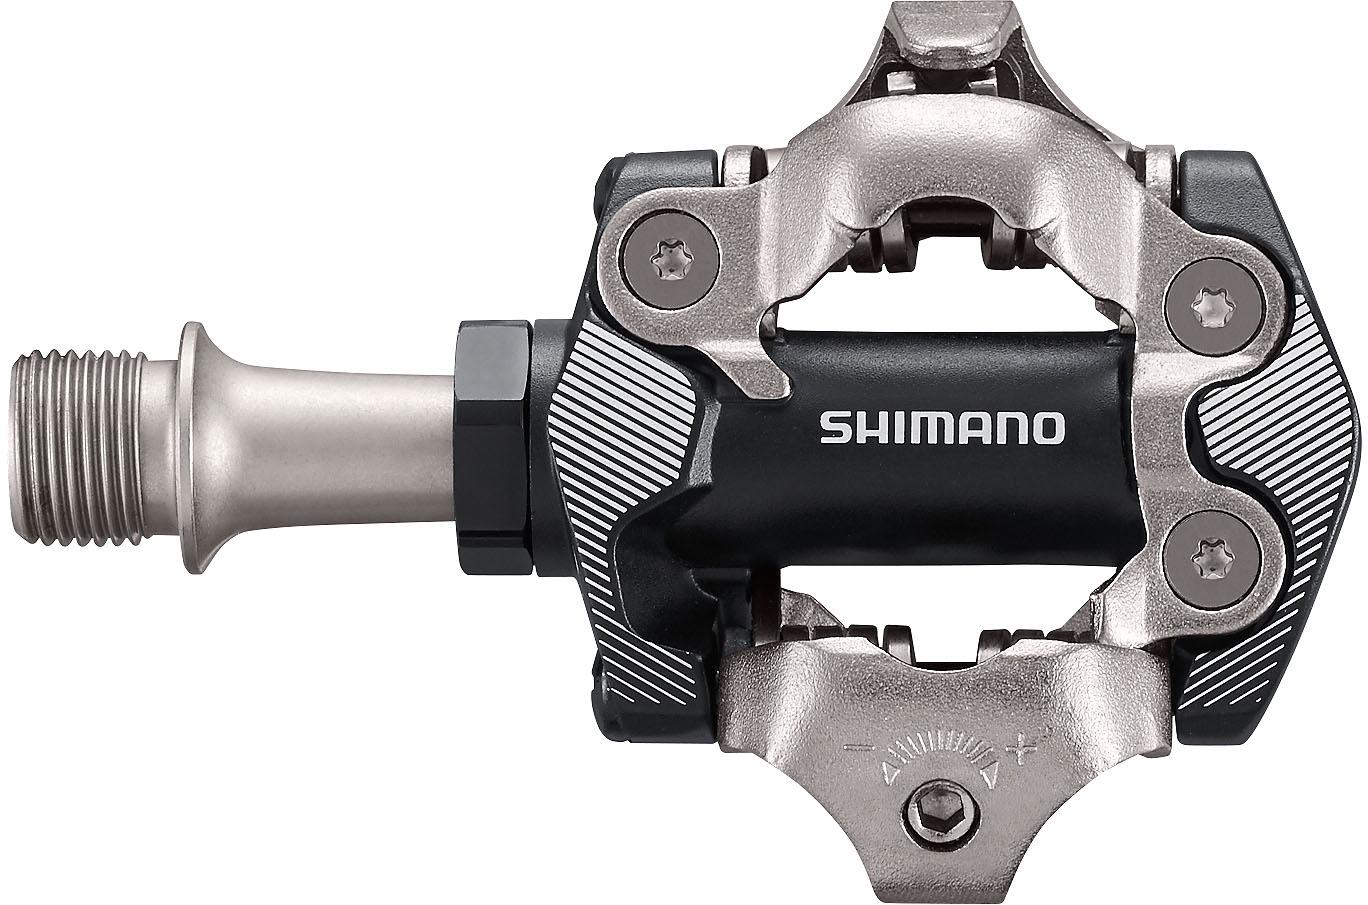 Shimano Xt M8100 Pedal  Black